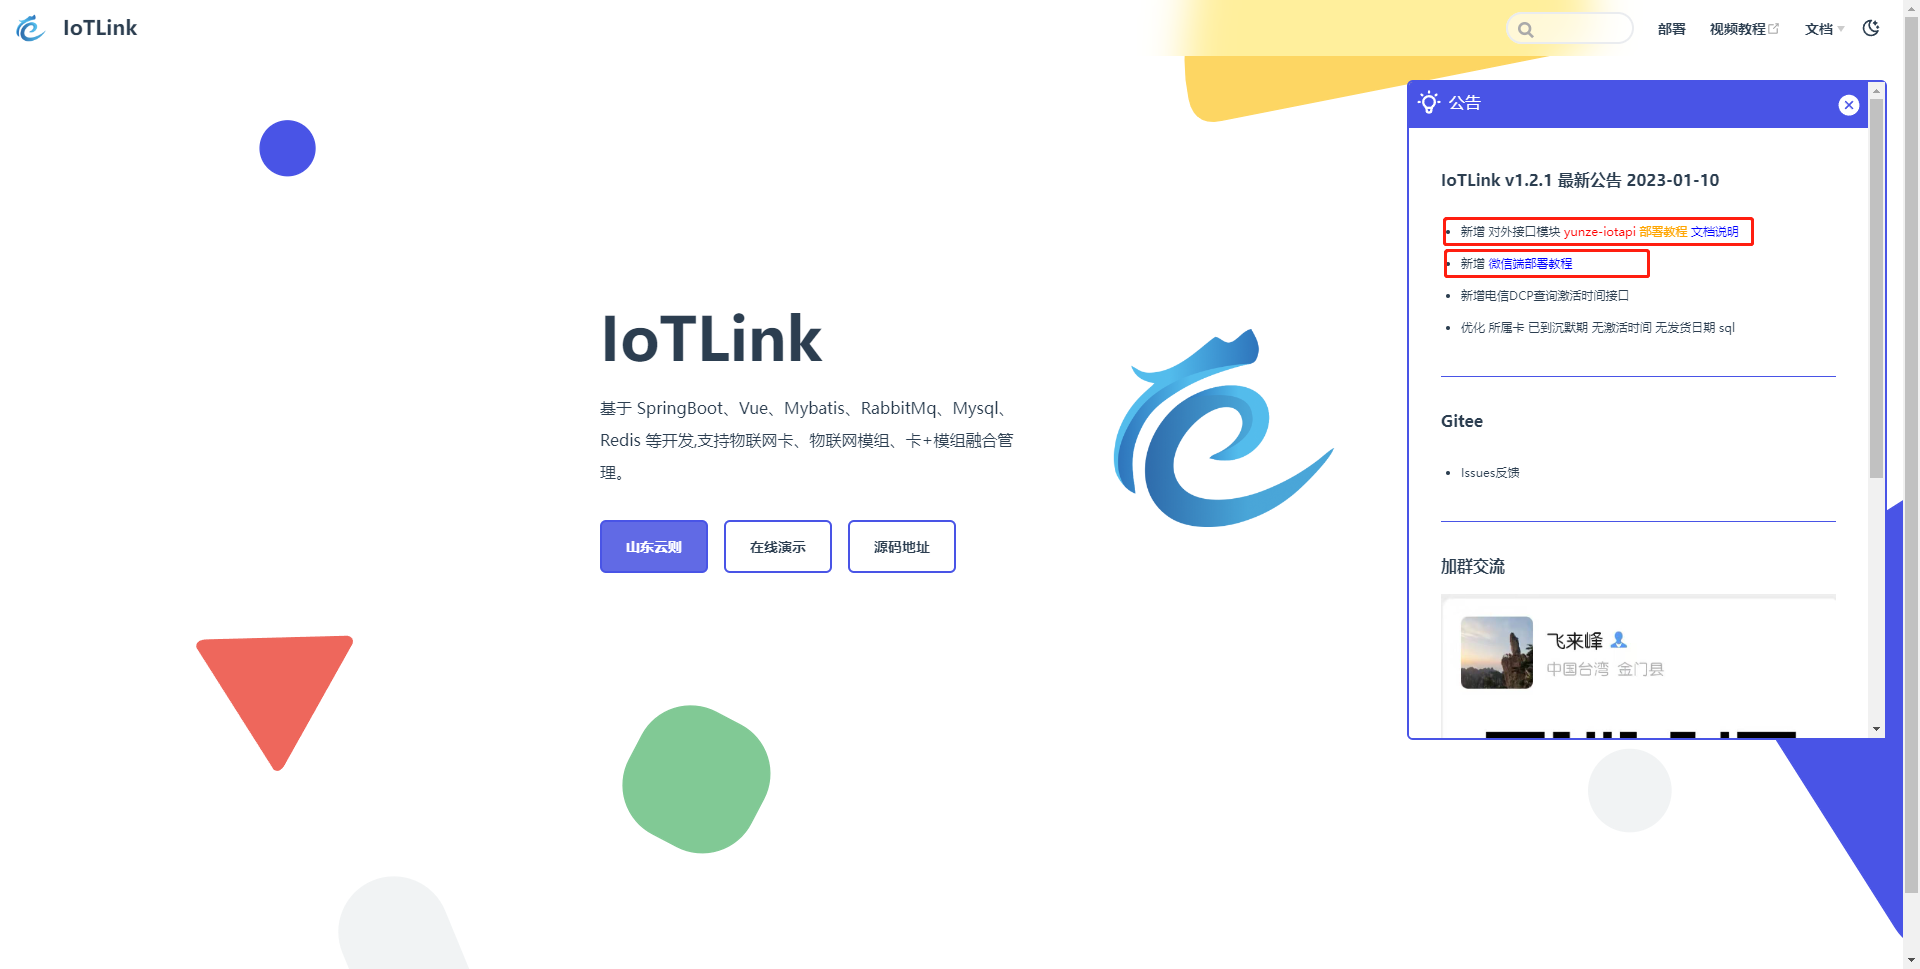 IoTLink v1.2.1 最新公告